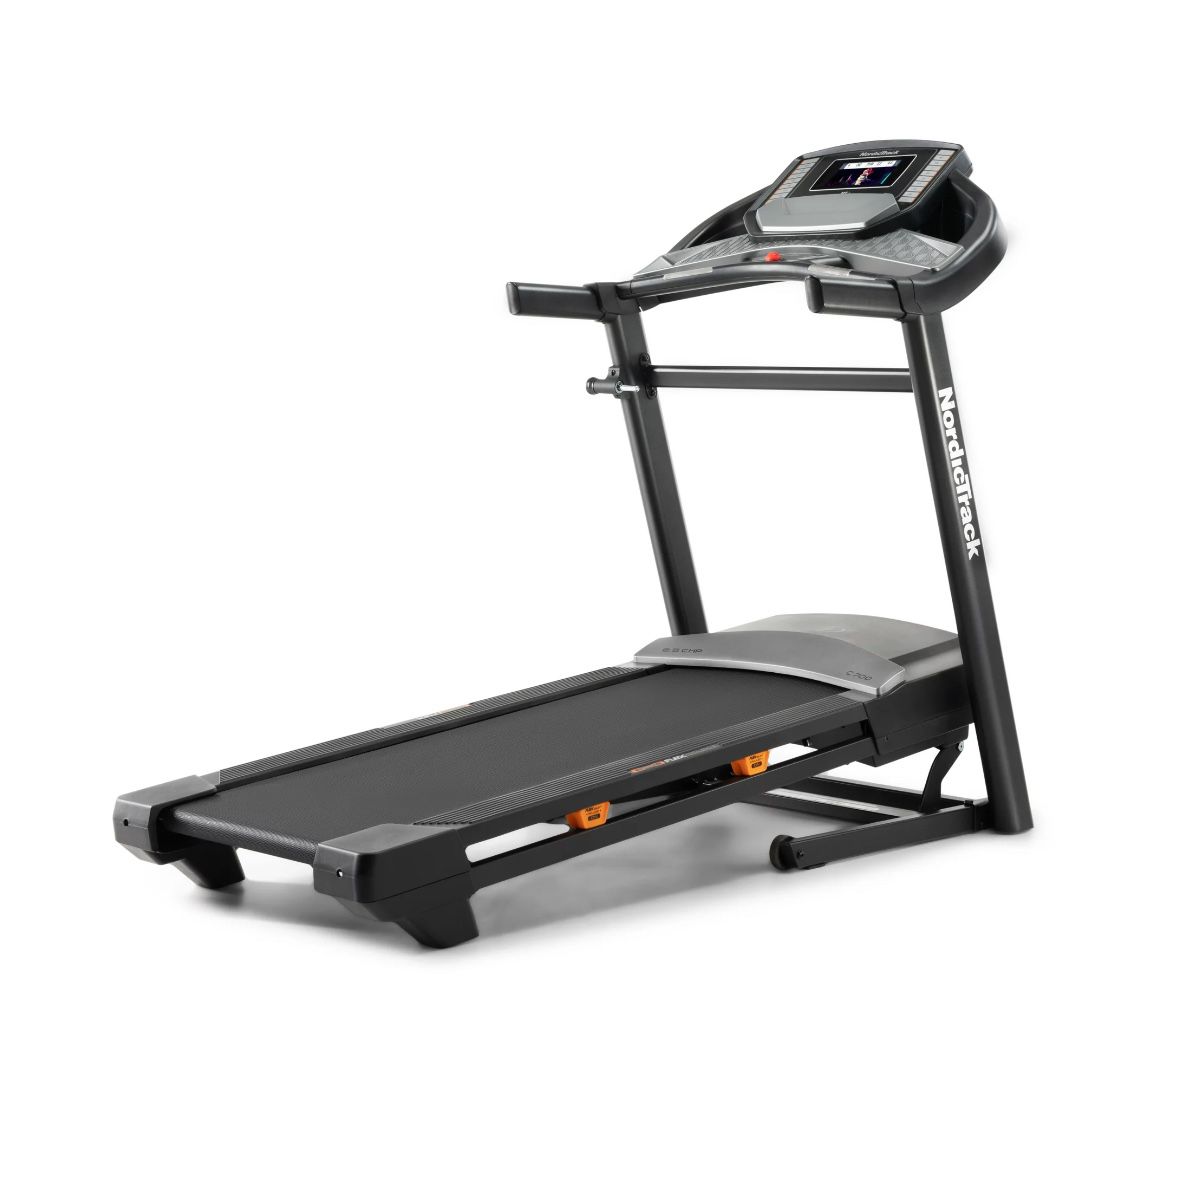 NordicTrack C700 Treadmill 